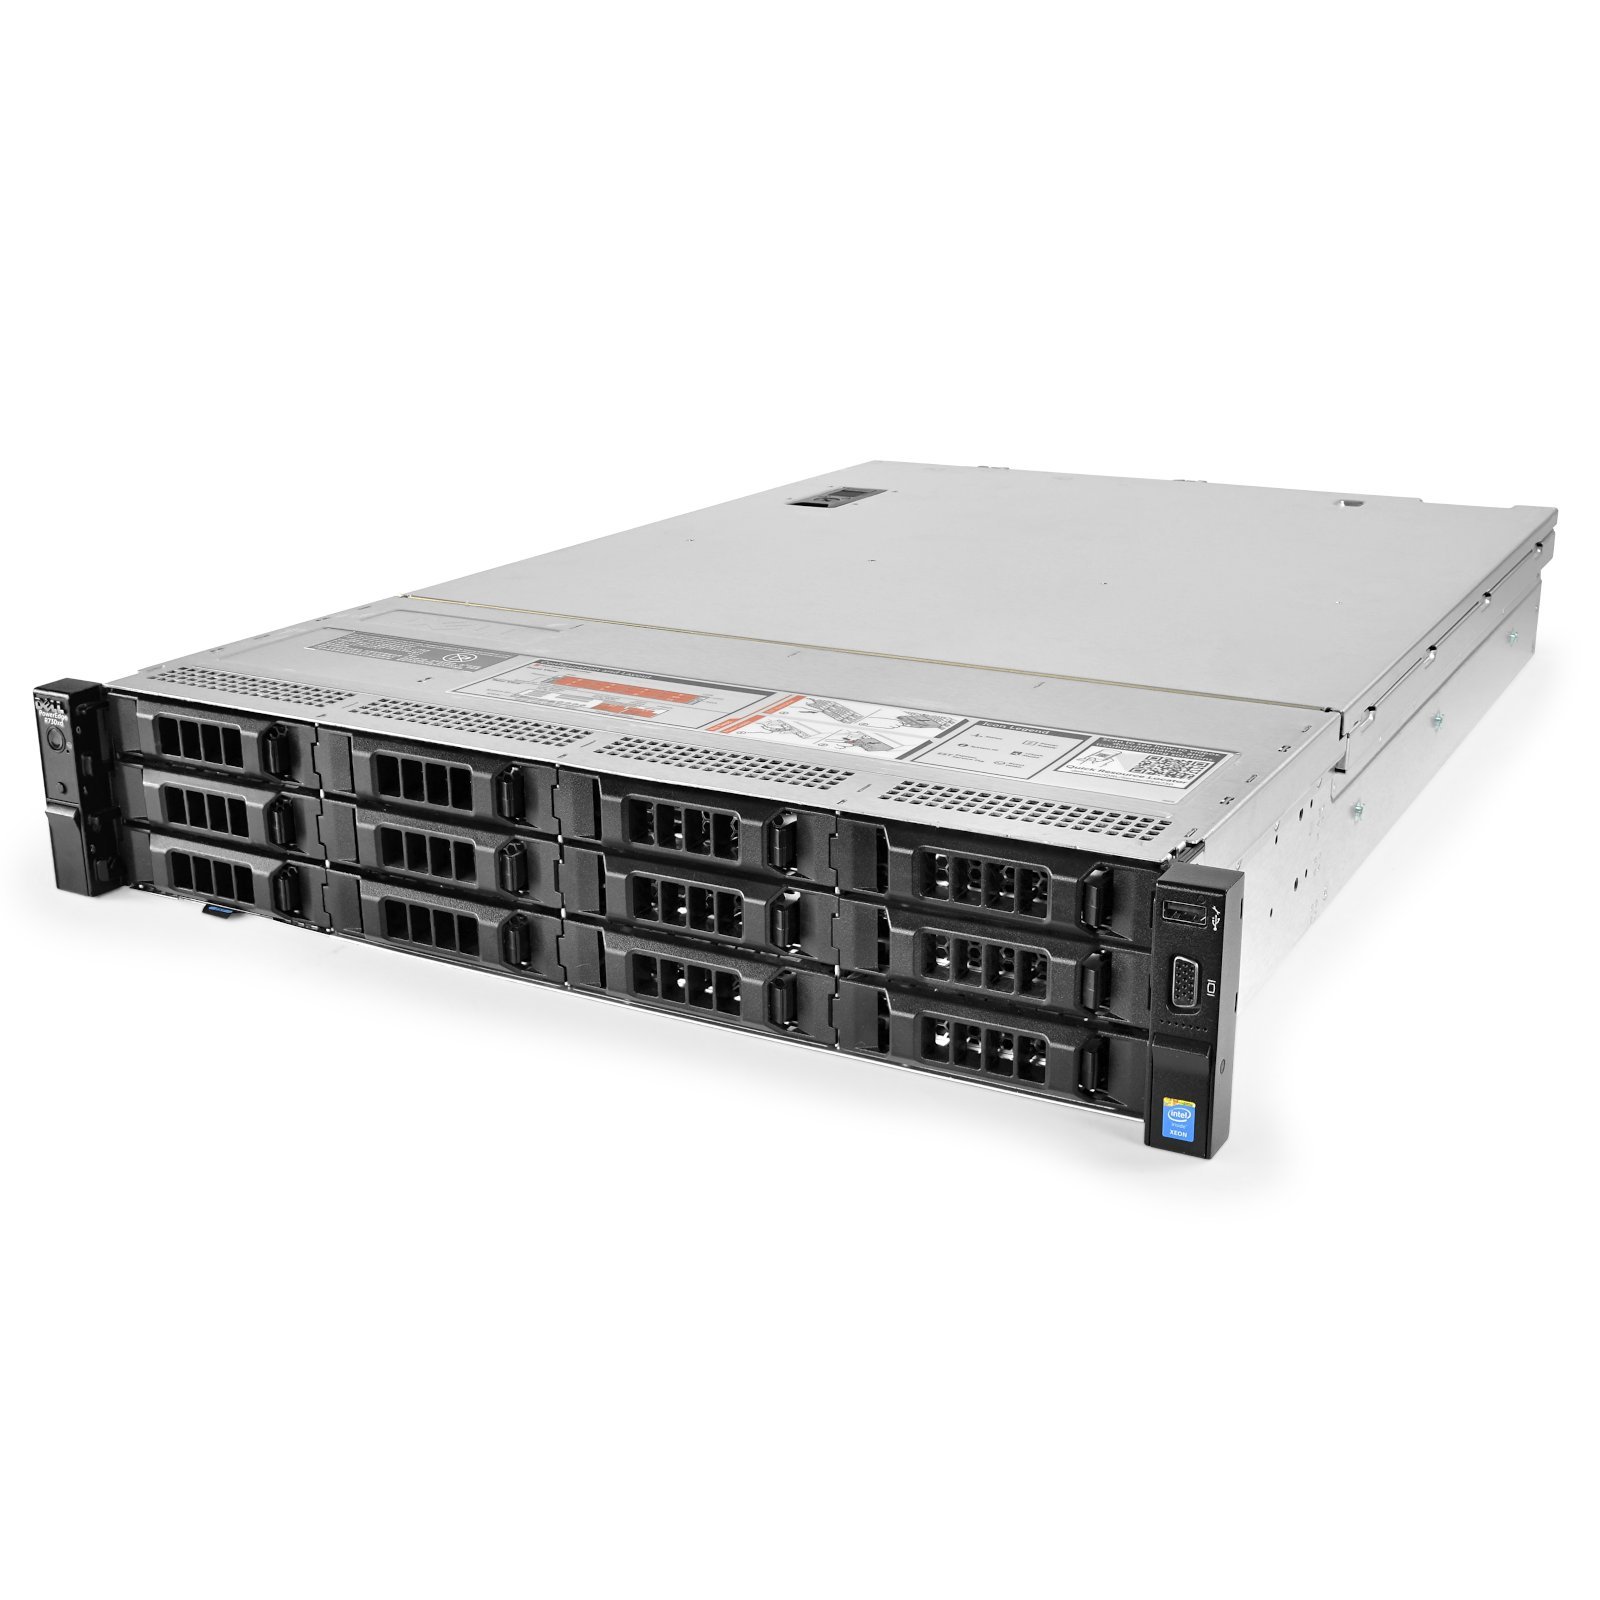 Подробное фото Сервер DELL PowerEdge R730XD Xeon 2x E5-2683v3 64Gb 2133P DDR4 12x noHDD 3.5", SAS RAID Perc H730 mini, 1024Mb, 2*PSU 750W